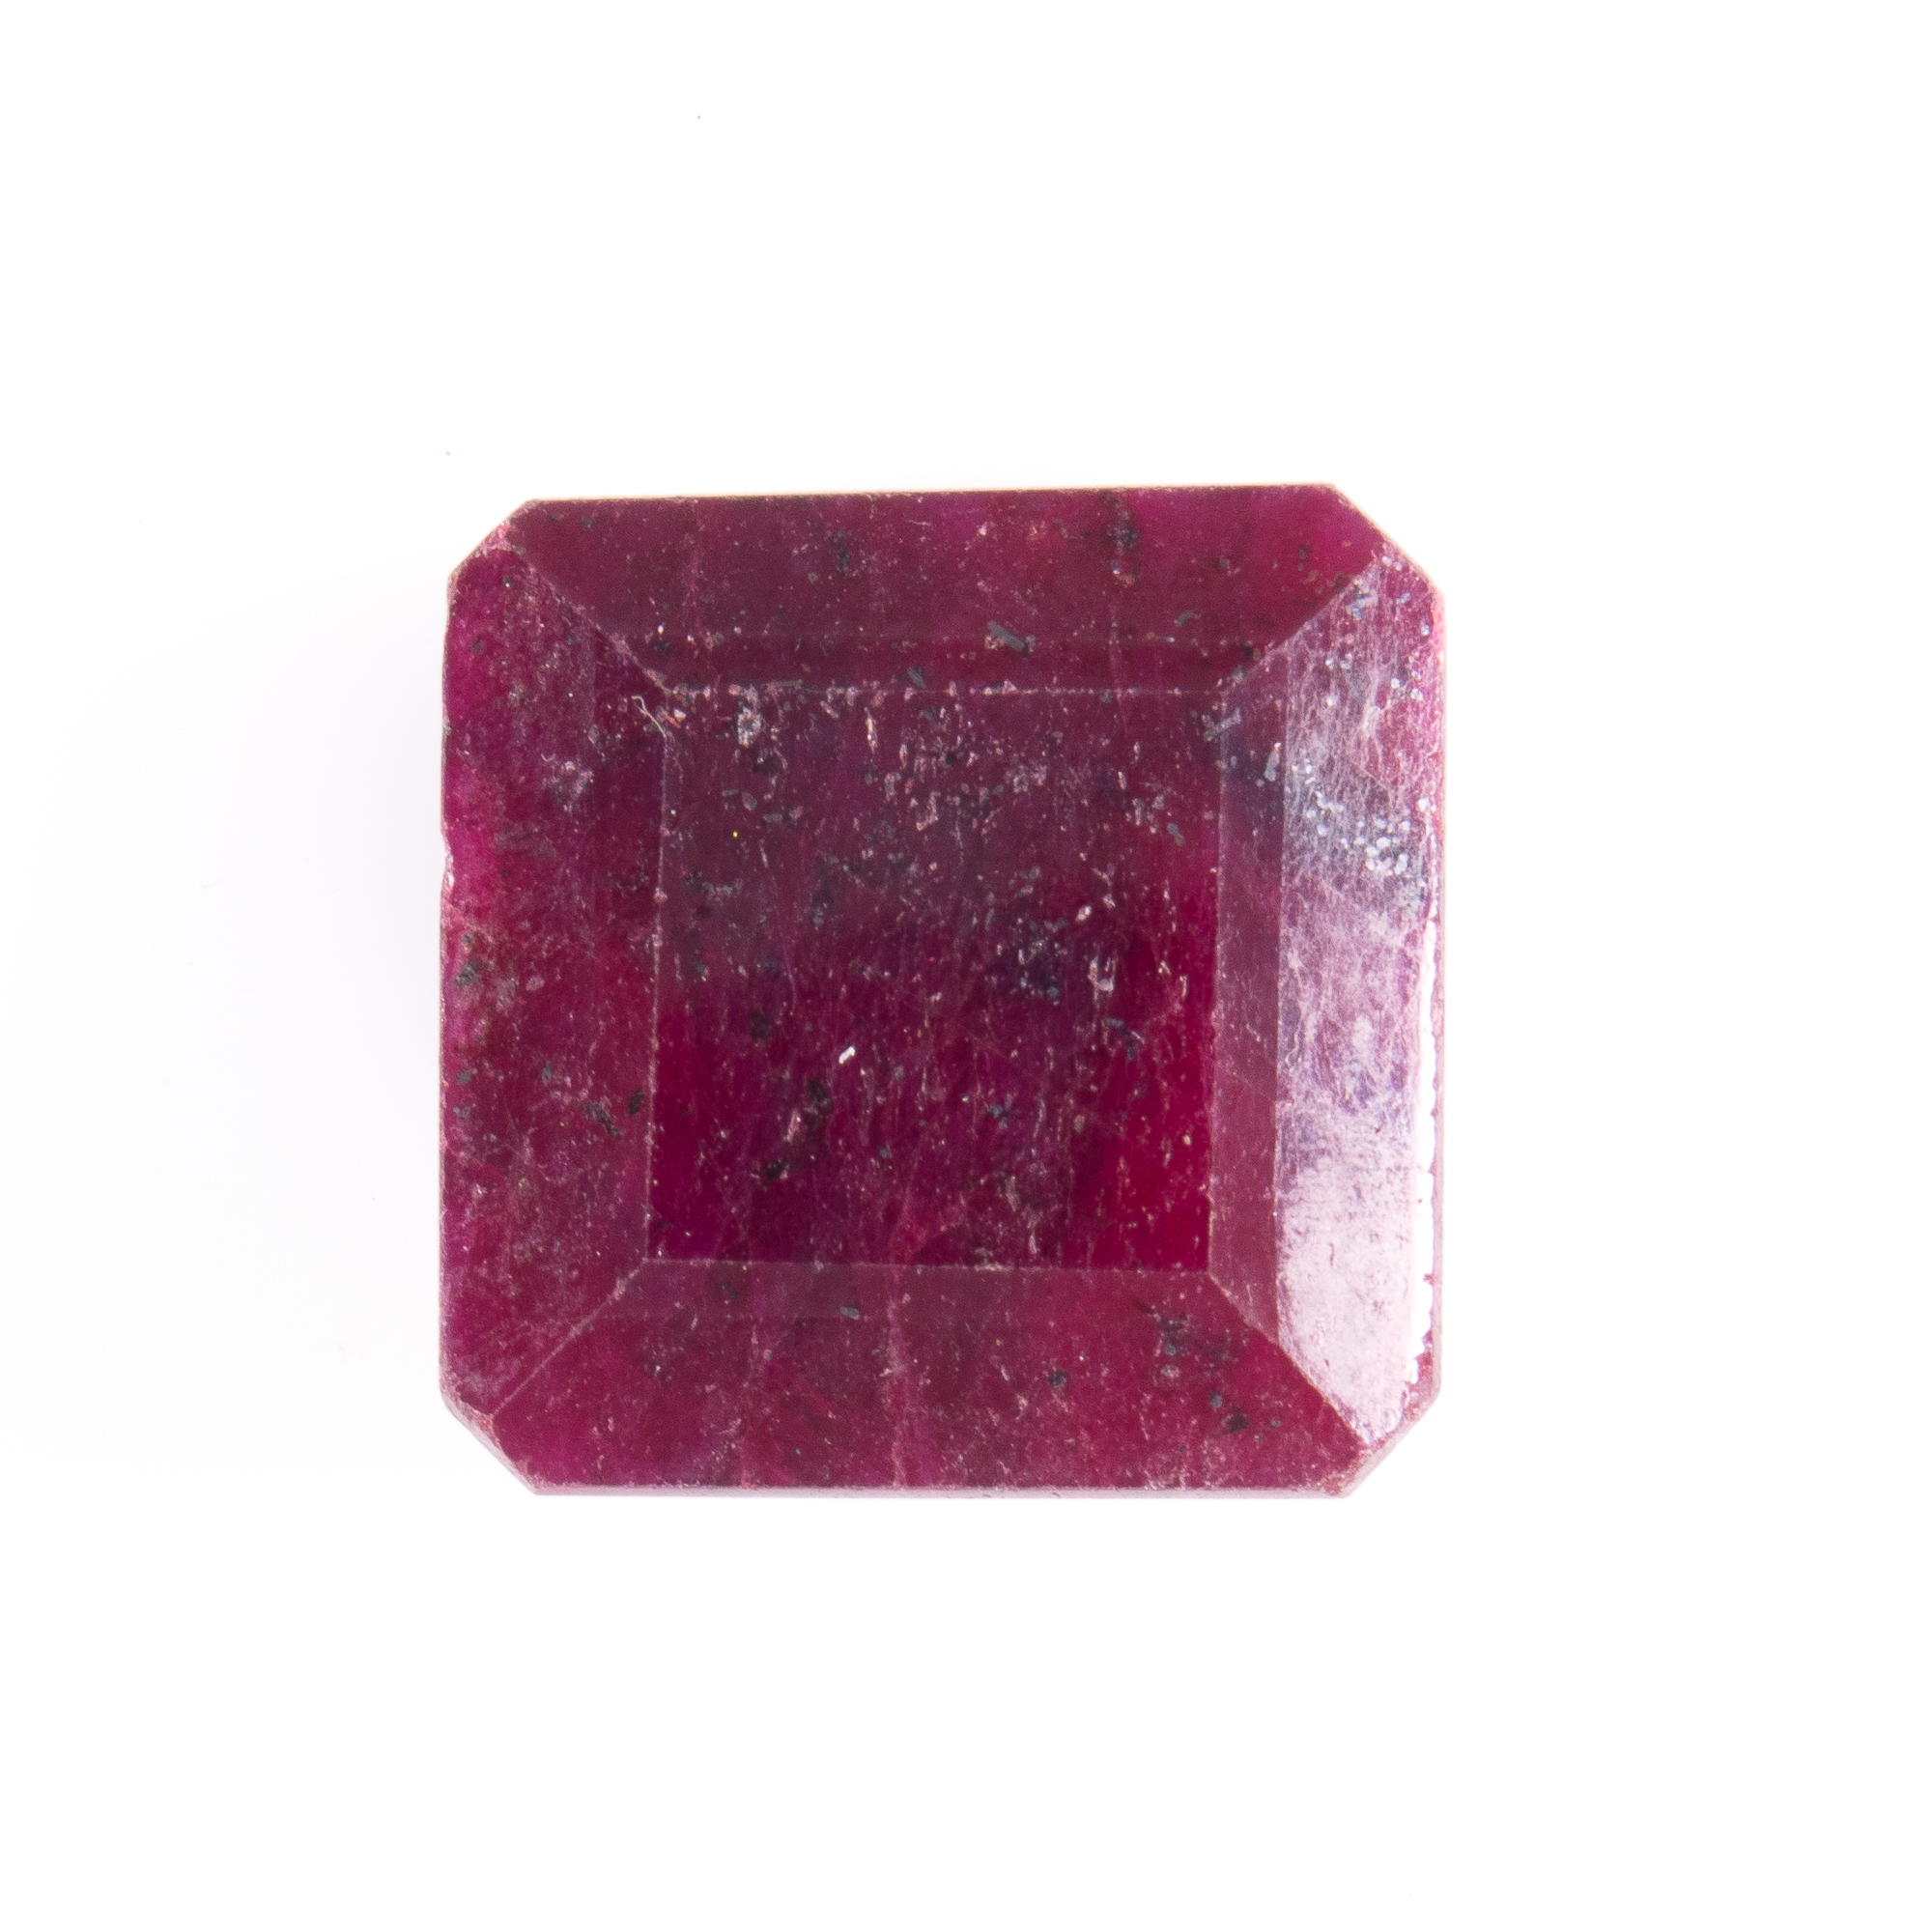 127ct Ruby Gemstone - Image 5 of 7